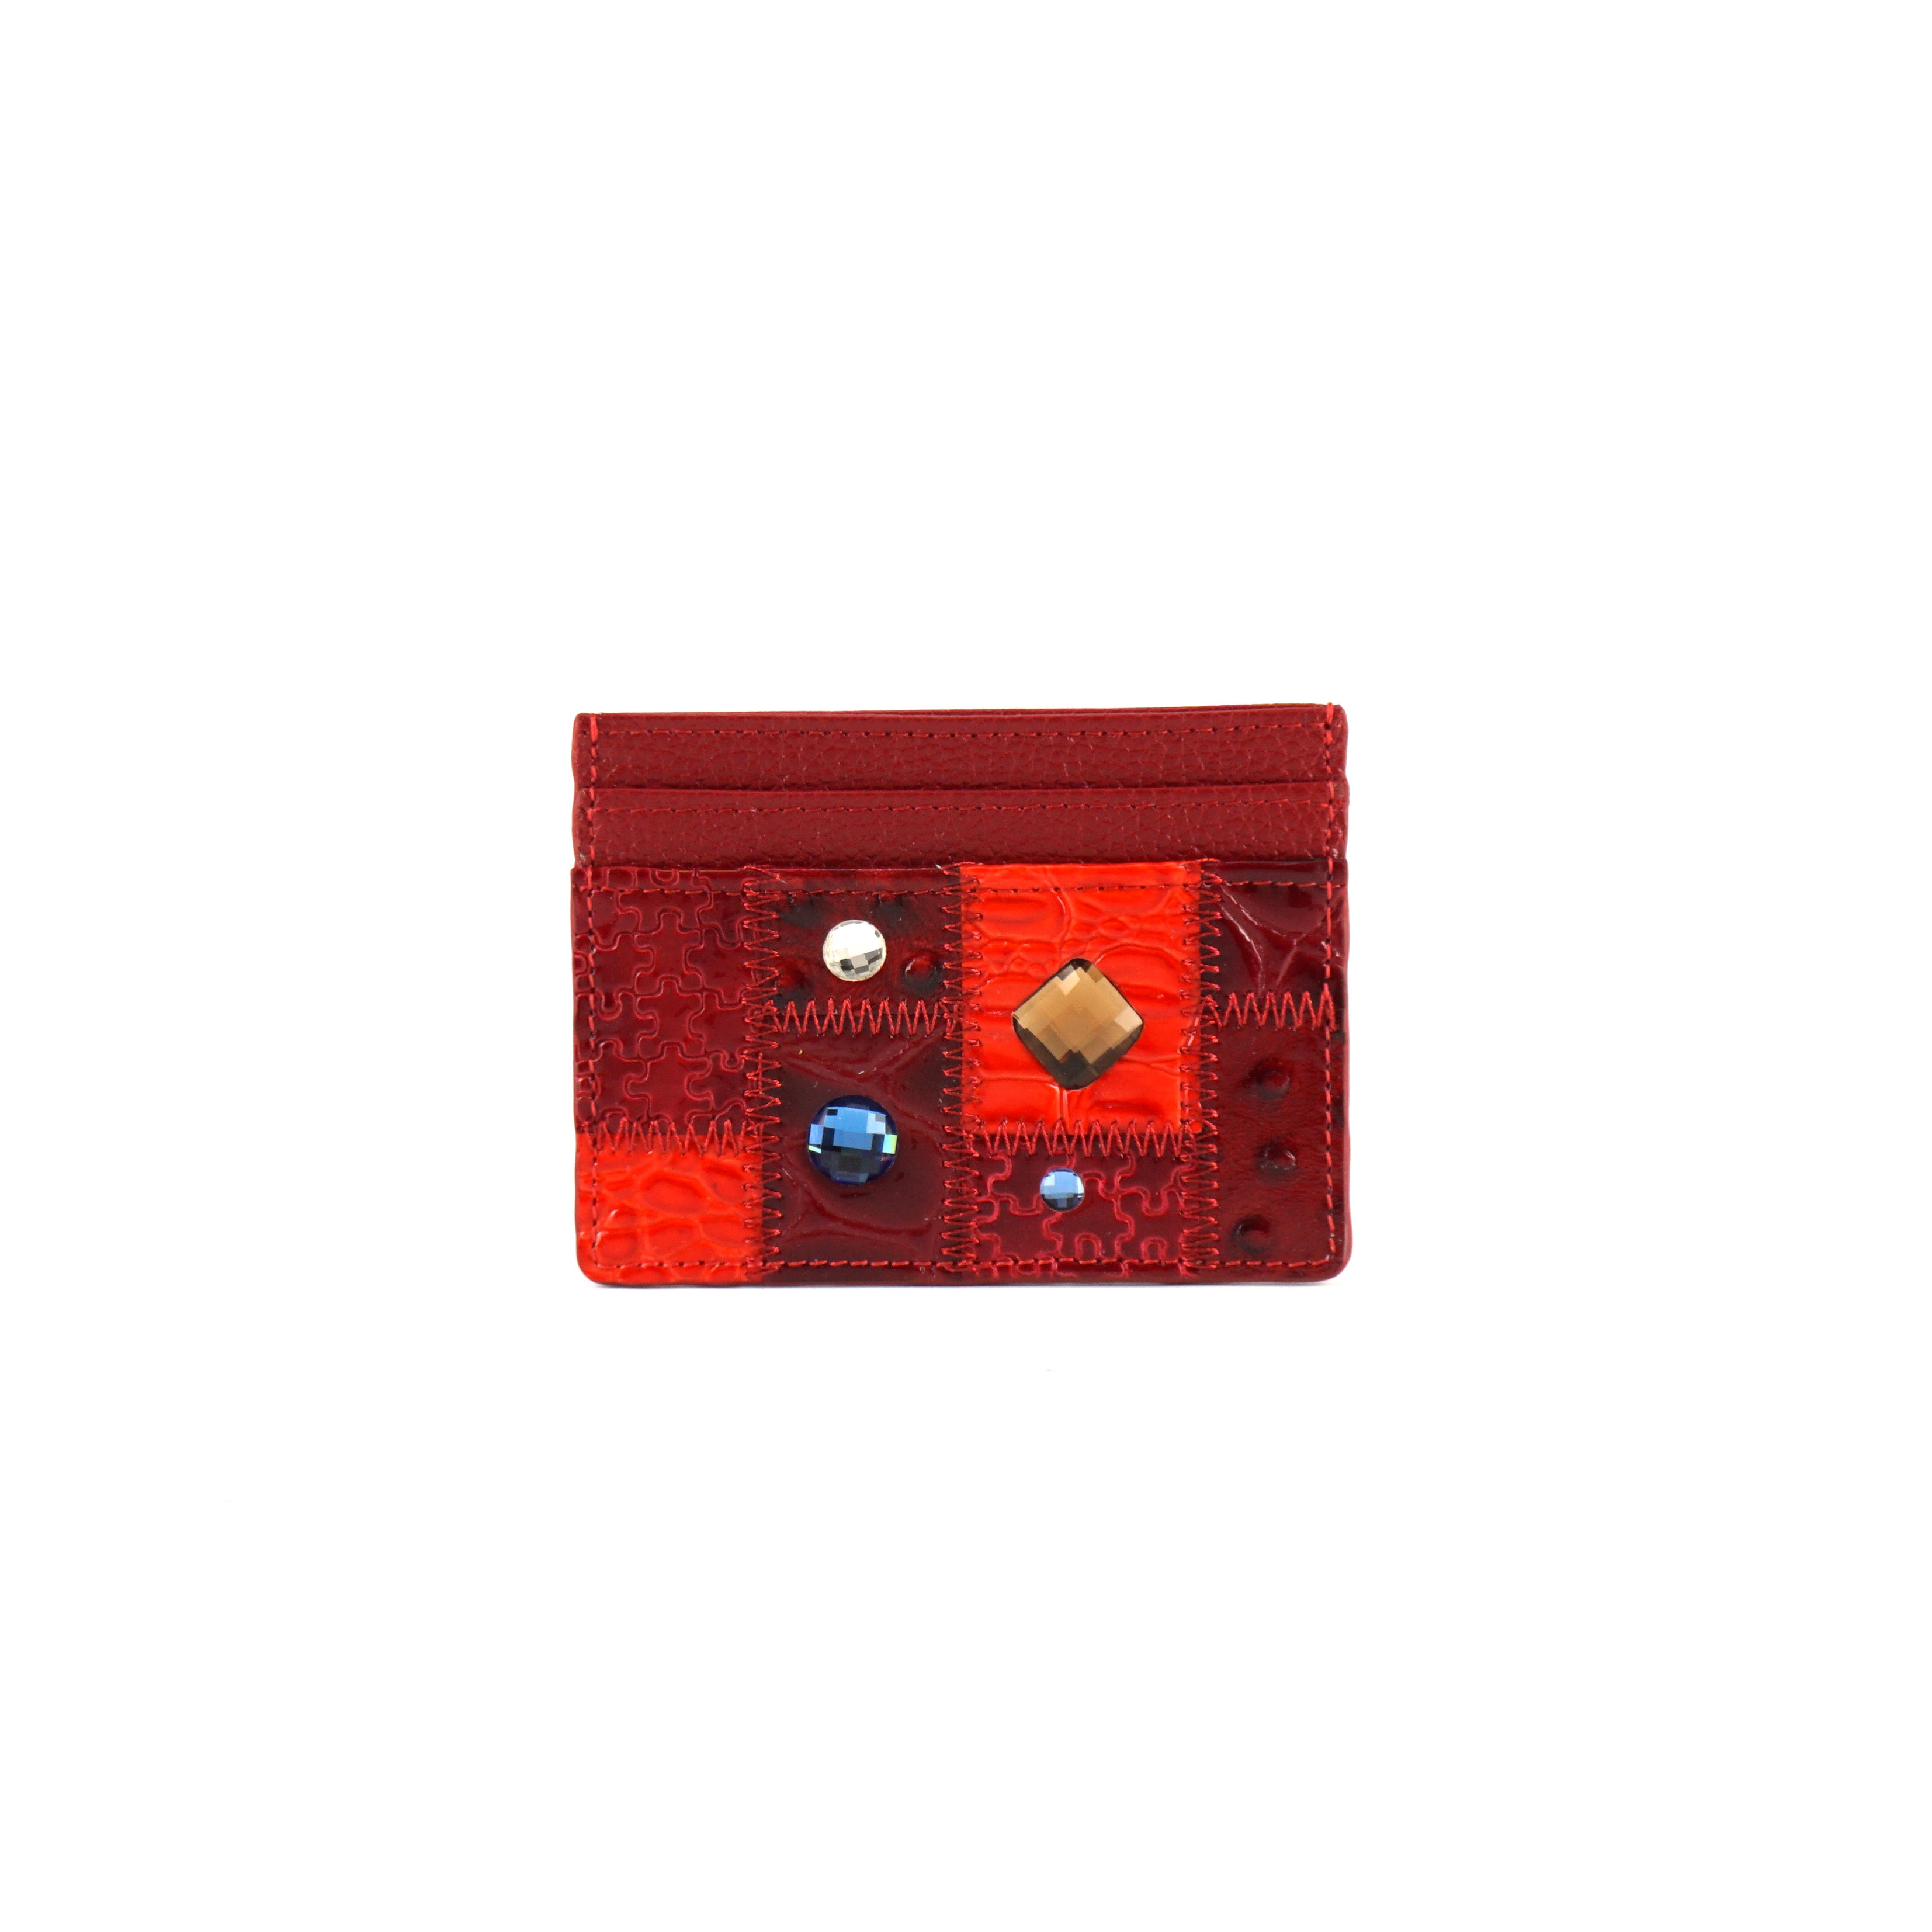 CARD HOLDER - RED